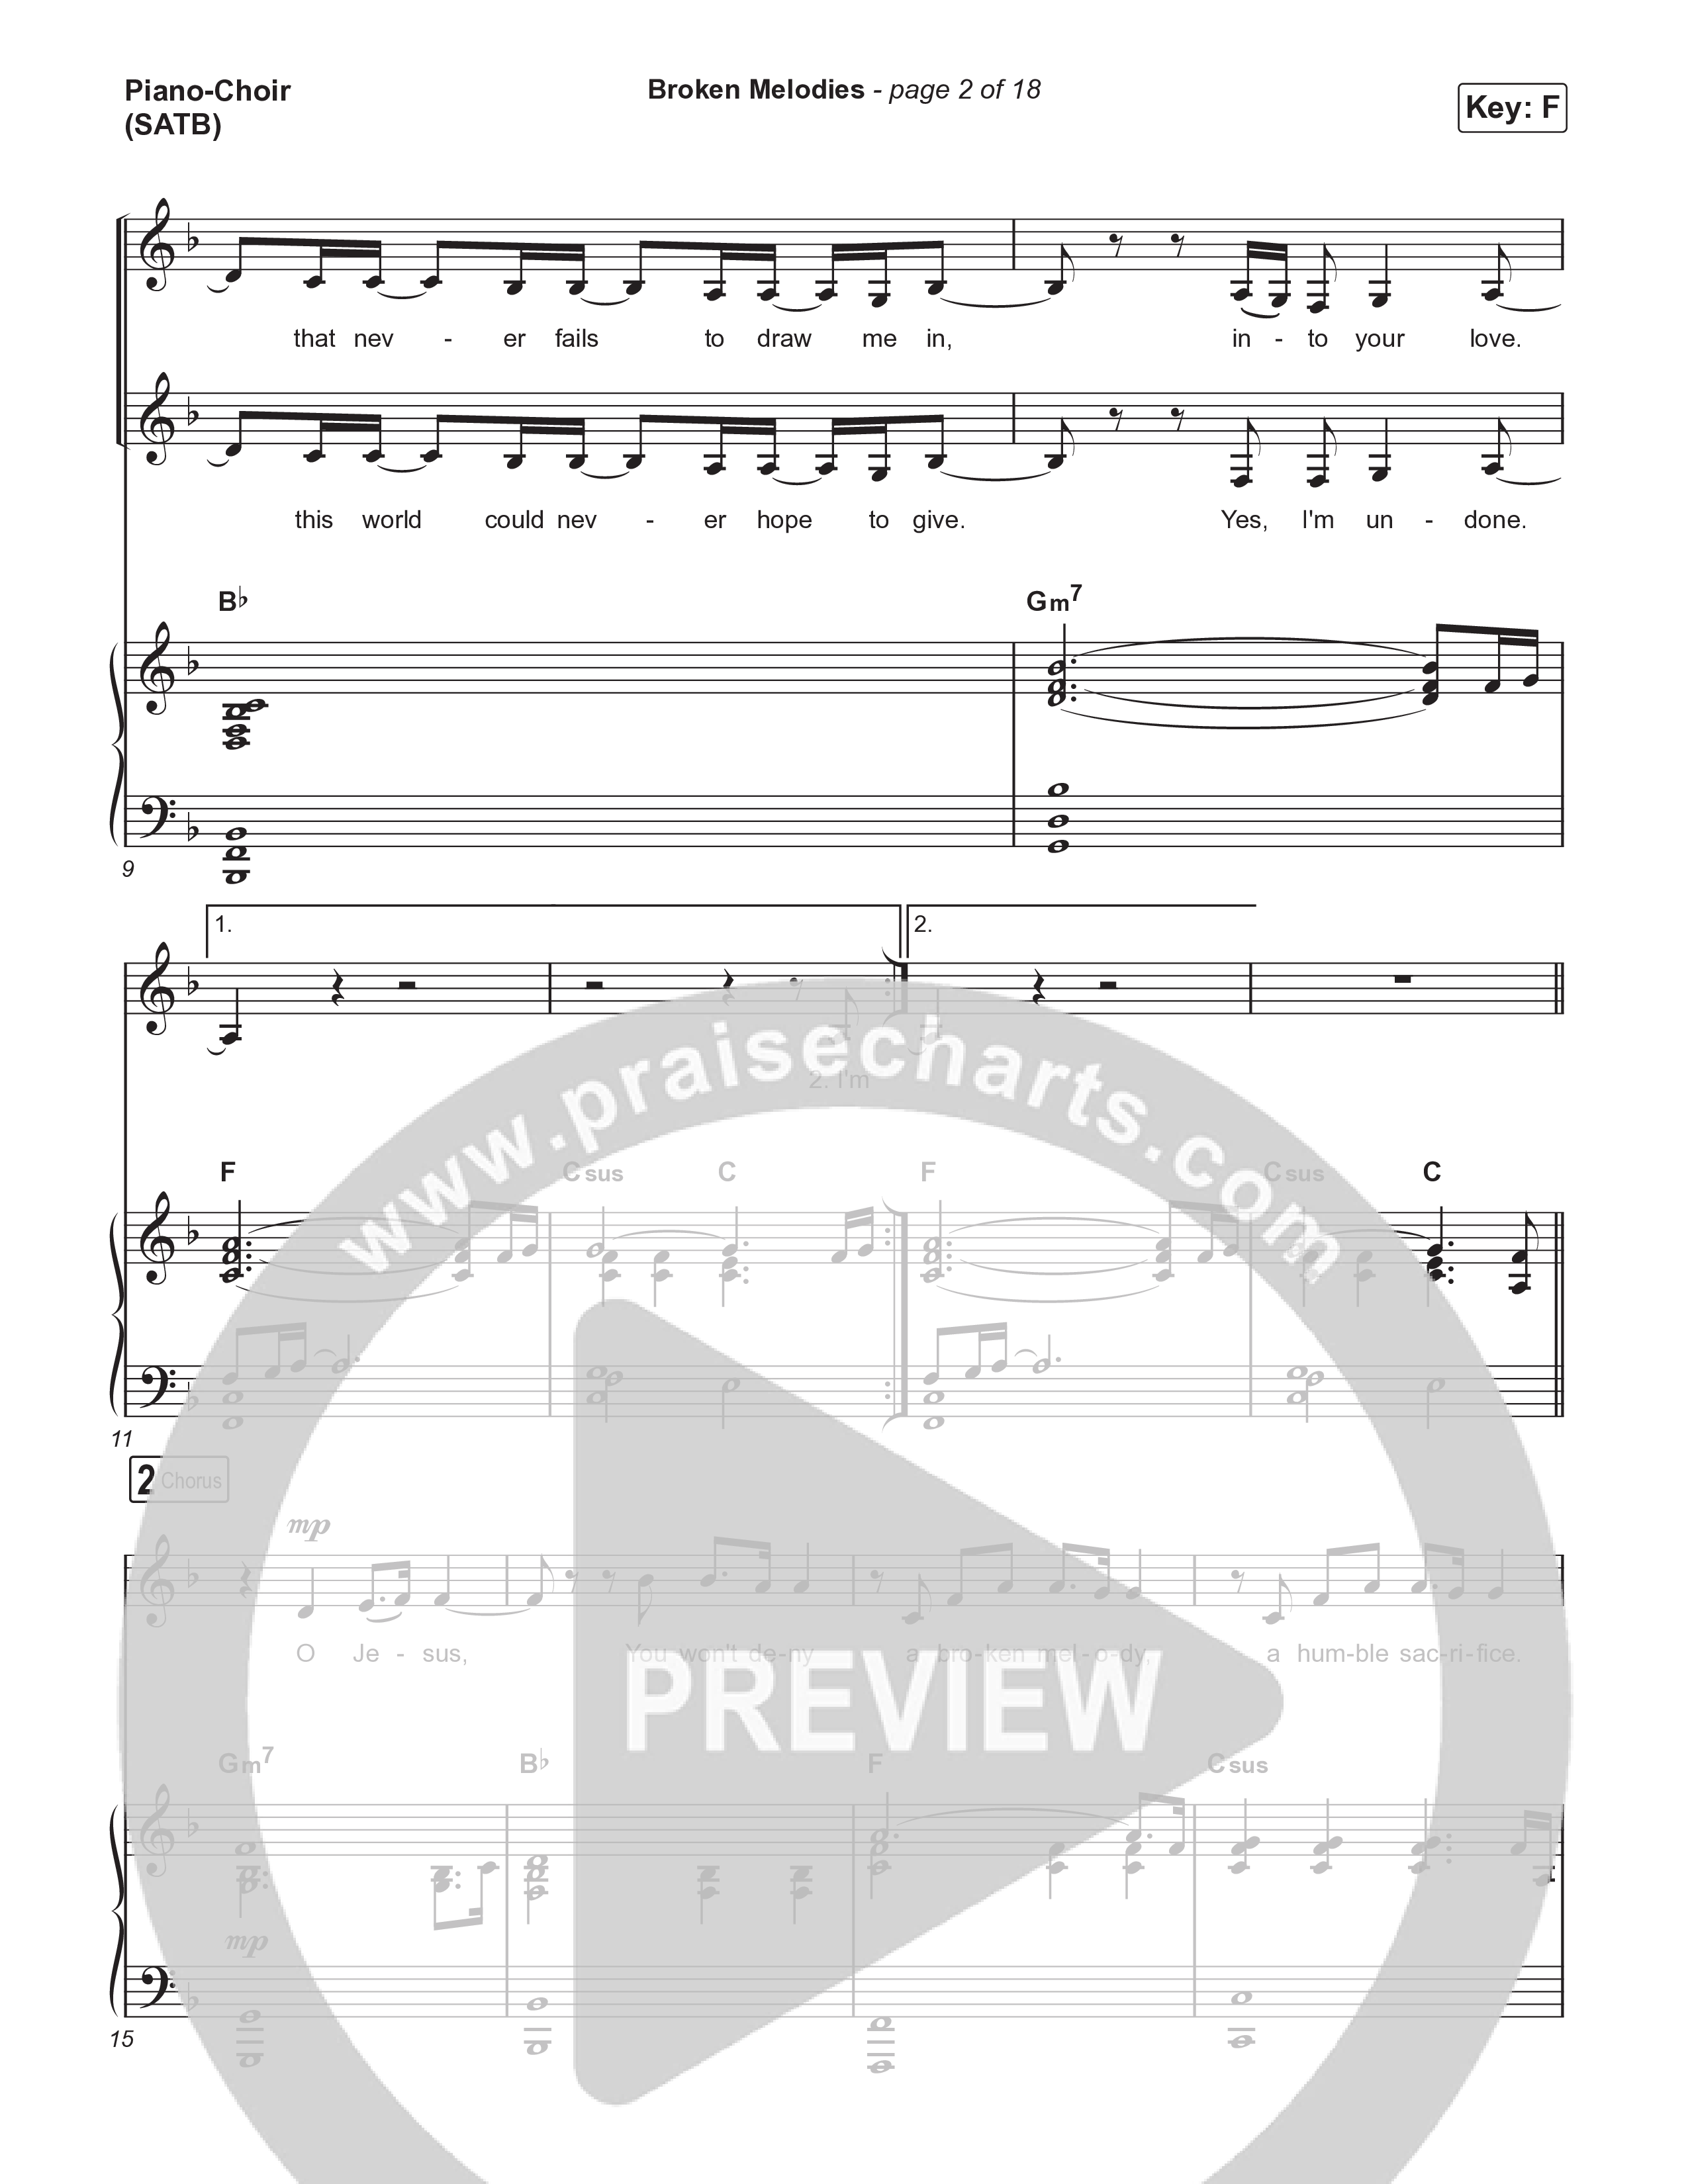 Broken Melodies Piano/Vocal (SATB) (Maverick City Music / Roosevelt Stewart)